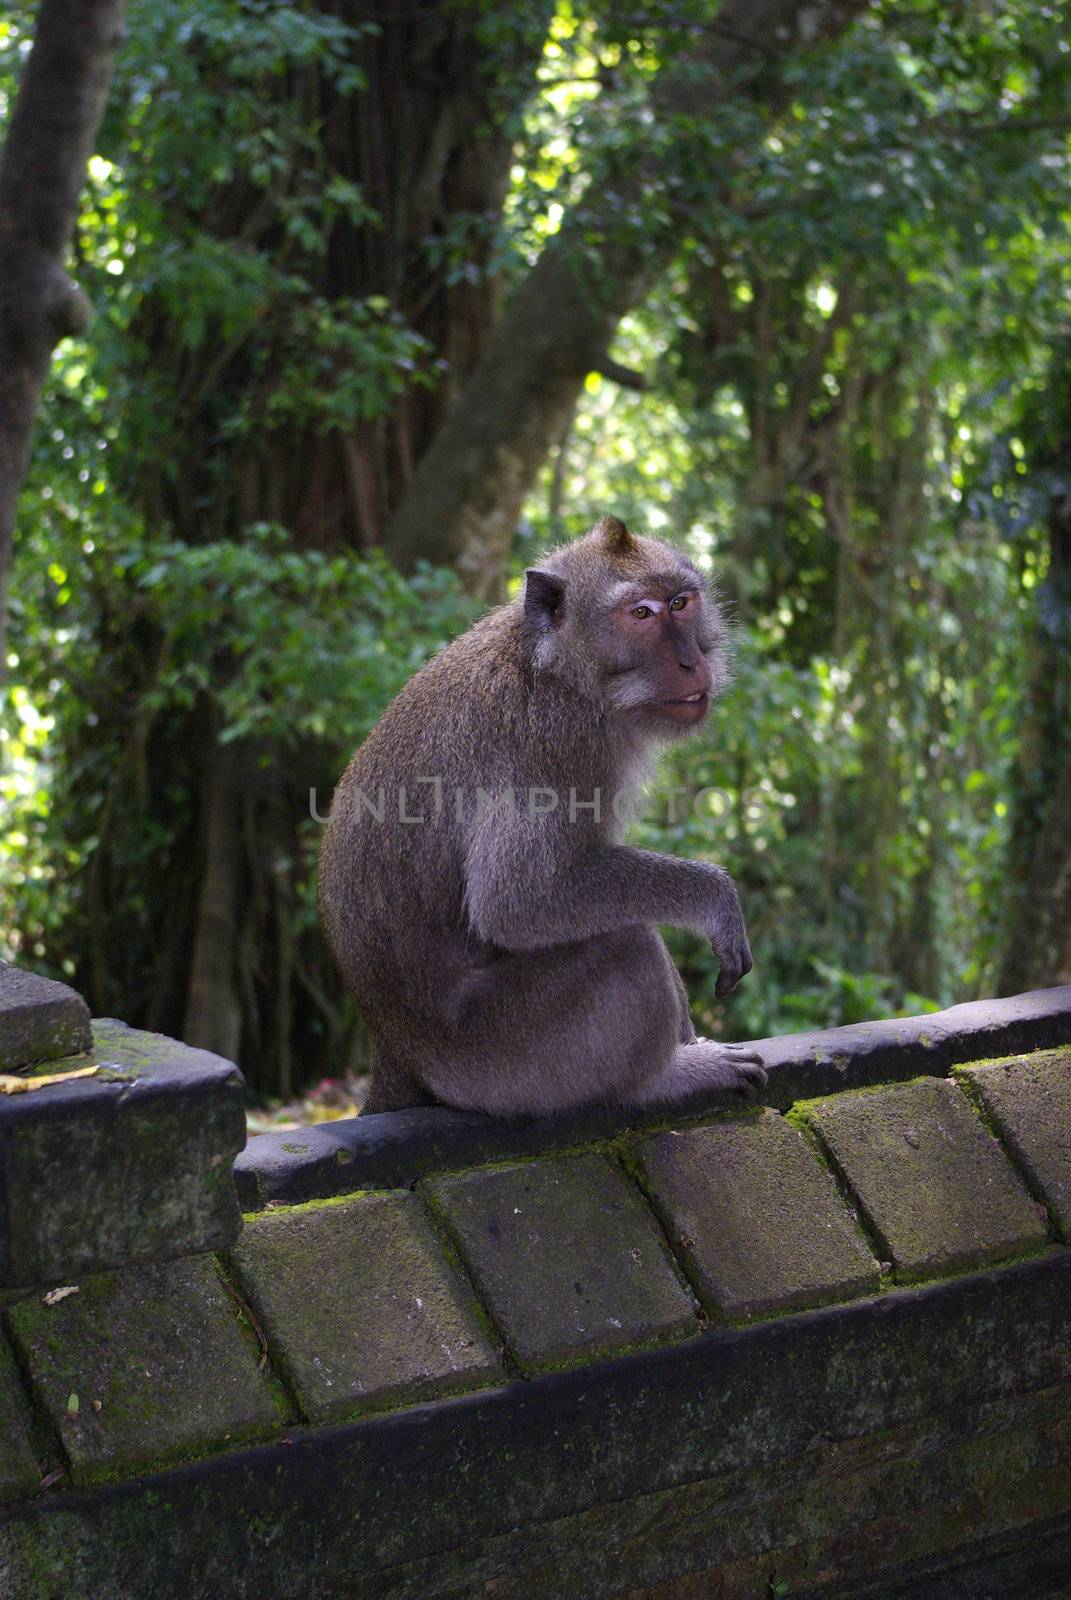 Little monkey on a stone wall by shkyo30